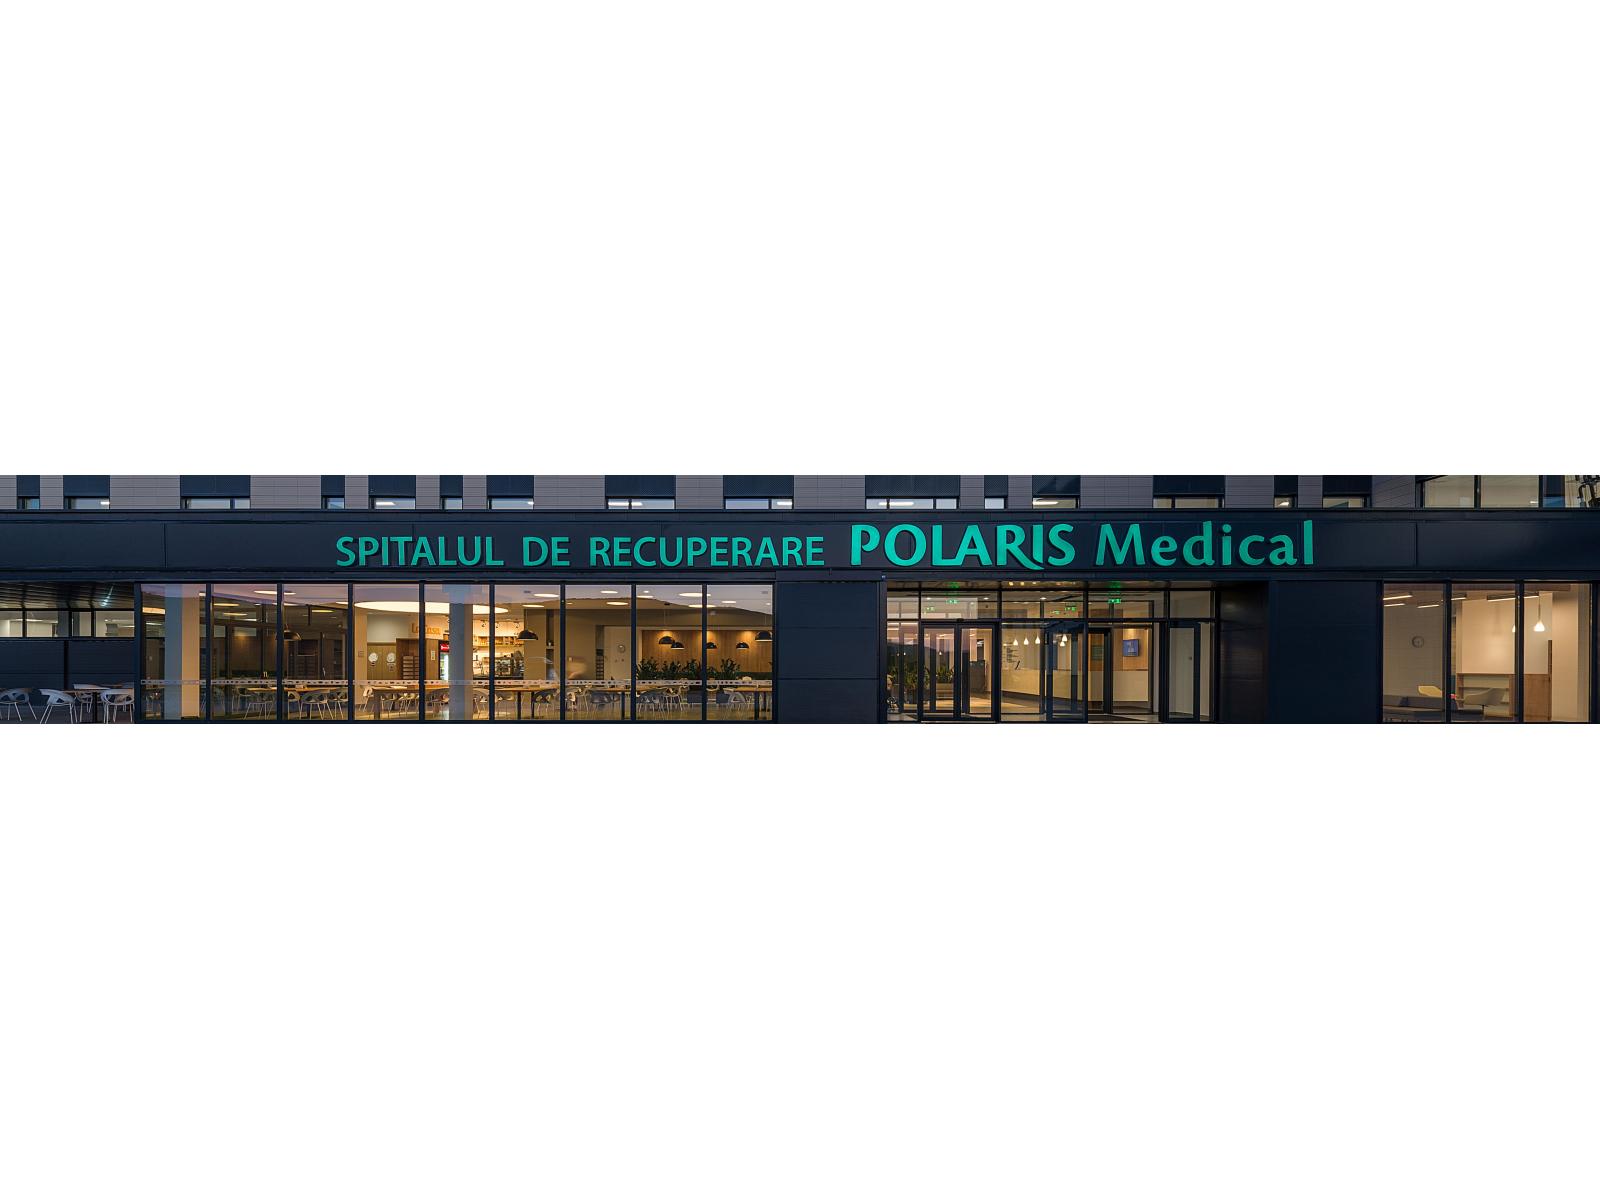 Spital de Recuperare Polaris Medical - Polaris_at_night-1-2.jpg